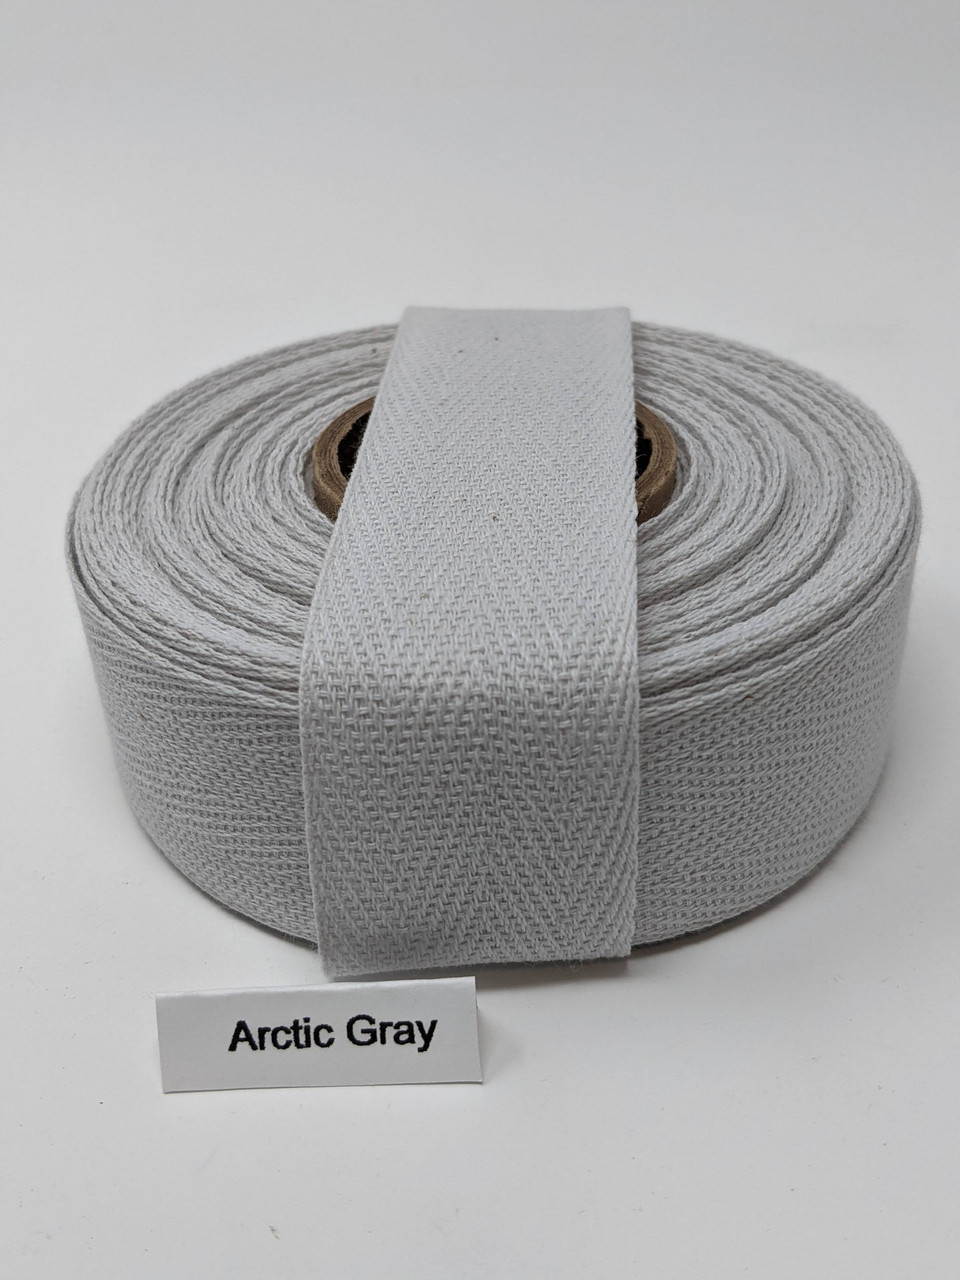 Cotton Twill Tape 1.25 Arctic Grey, 10 yard roll